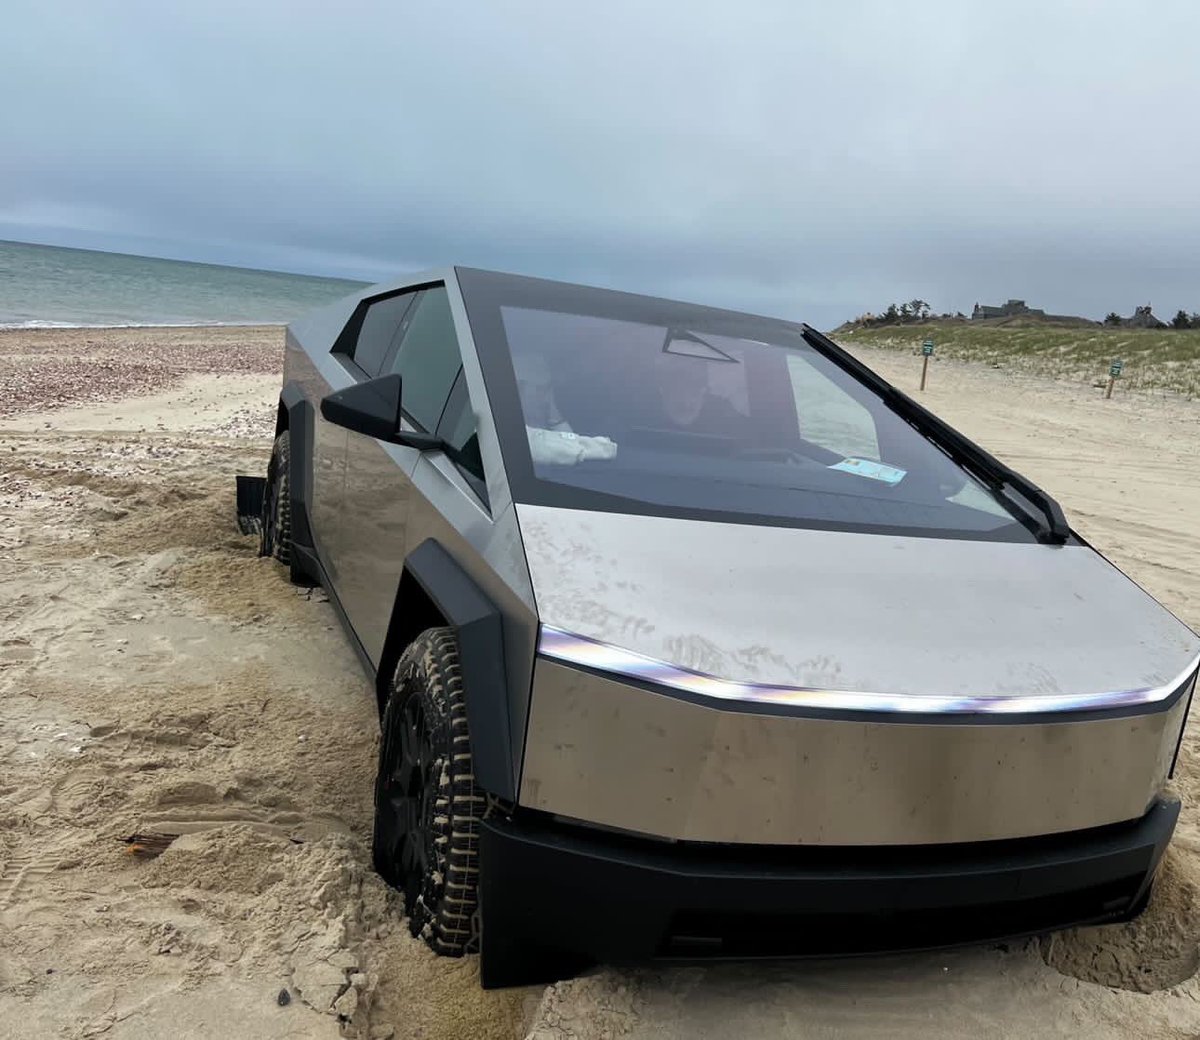 Tesla Cyber Truck stuck on a #Nantucket beach today. Can’t make it up